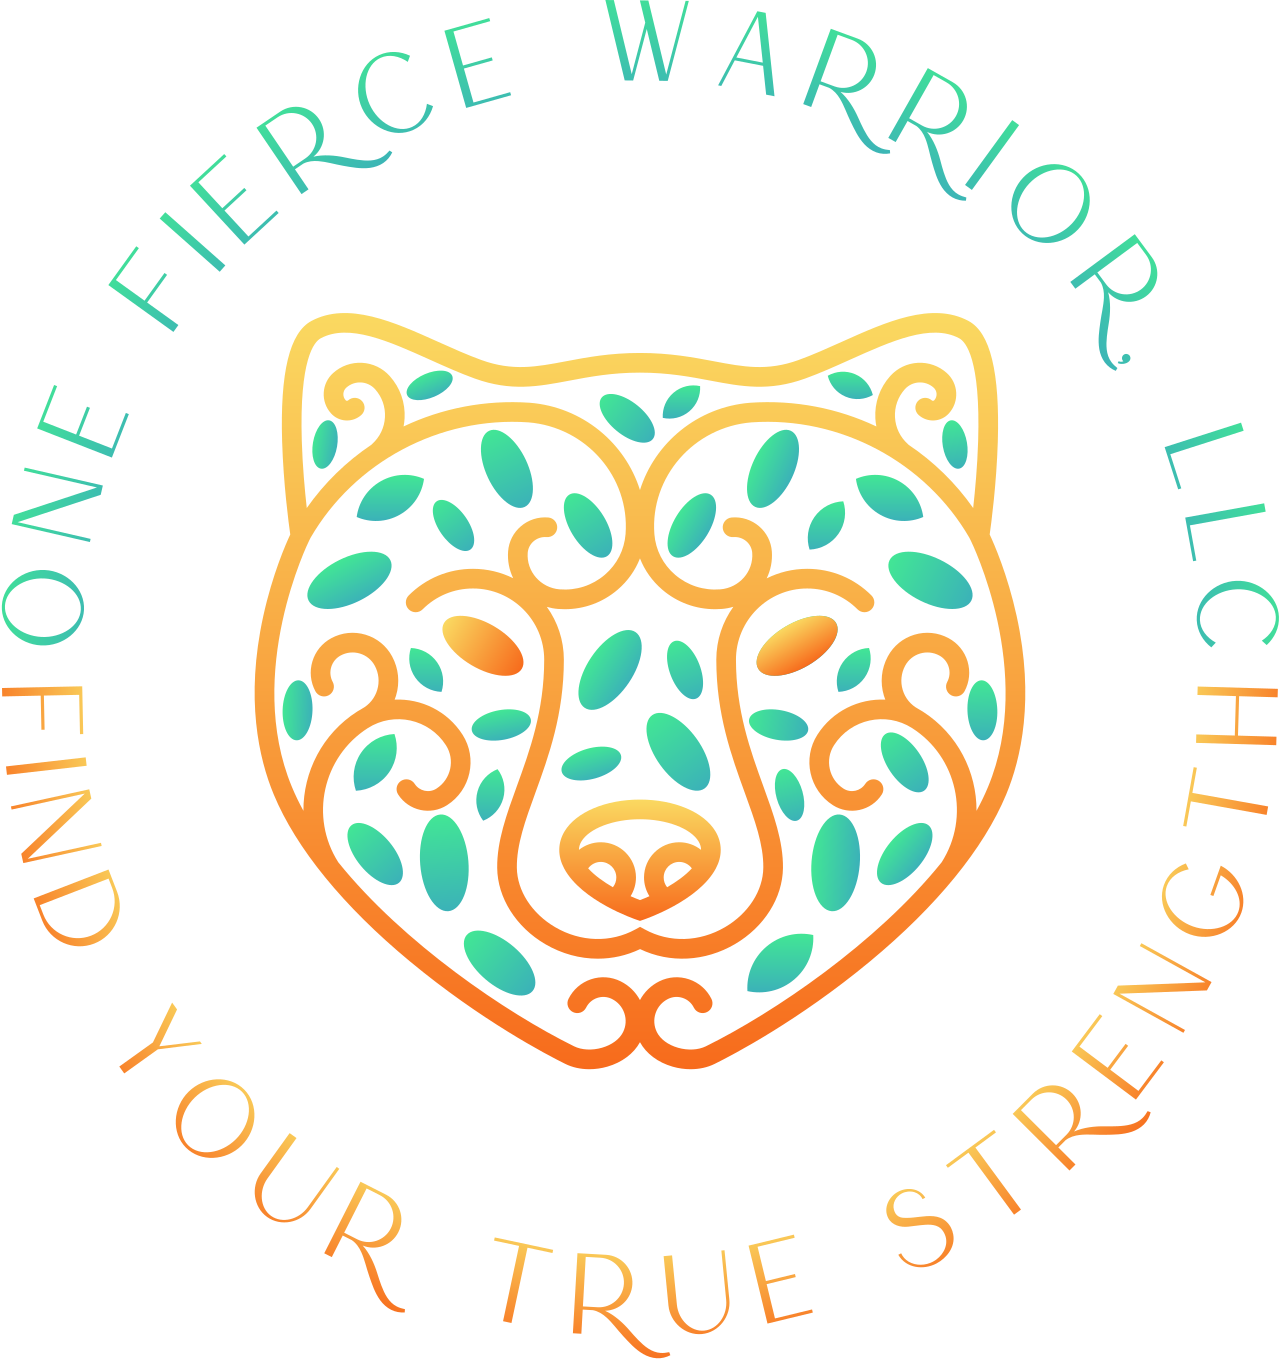 One Fierce Warrior, LLC's web page